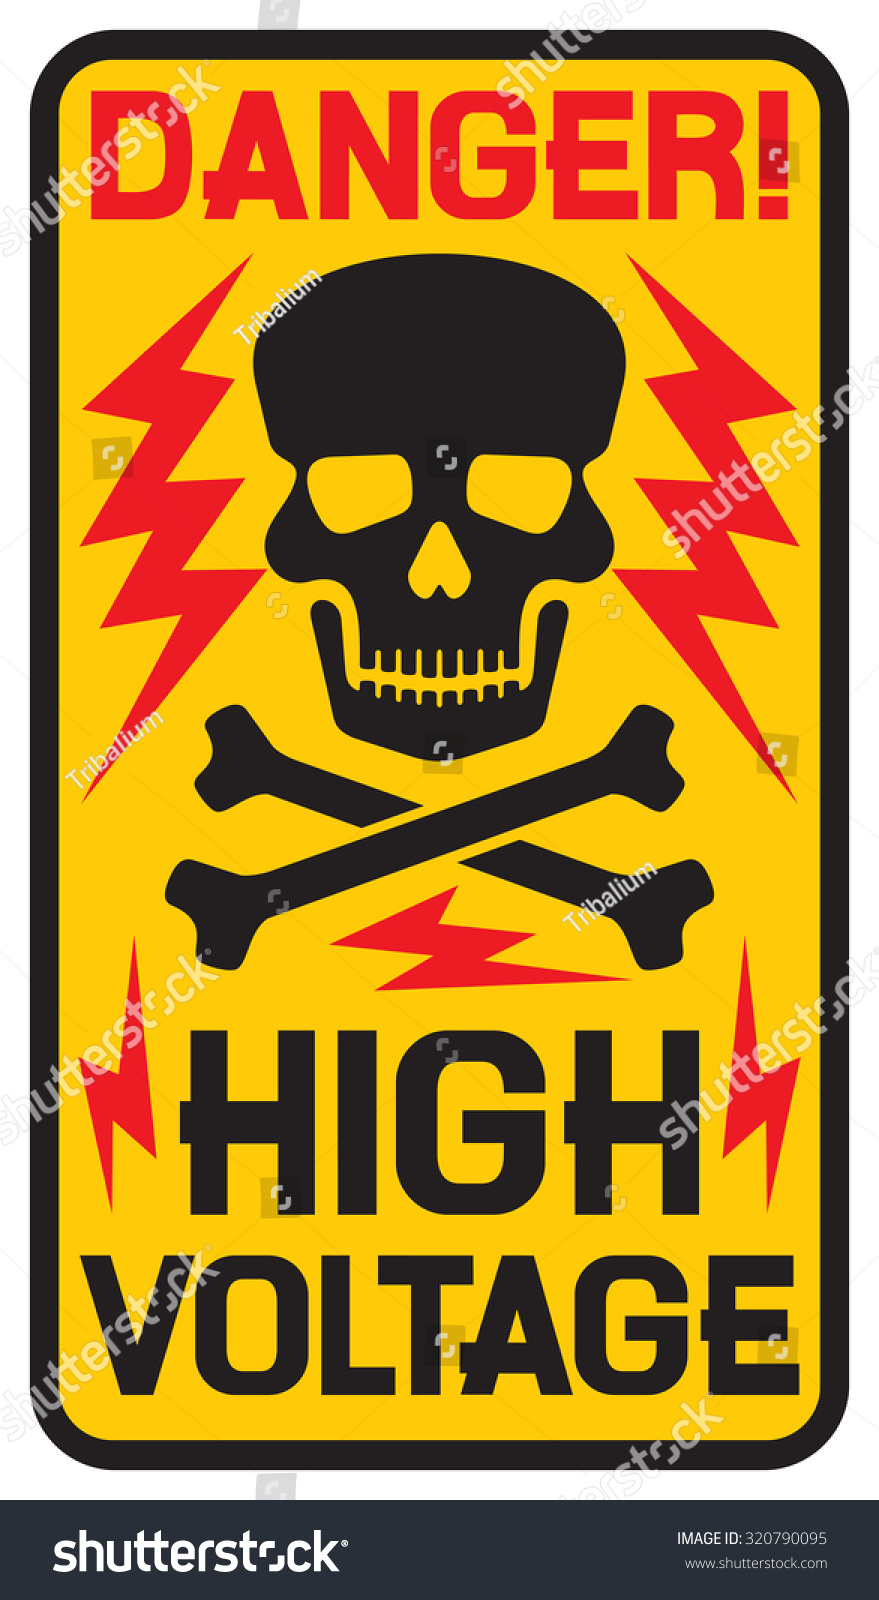 stock-vector-danger-high-voltage-sign-320790095.jpg